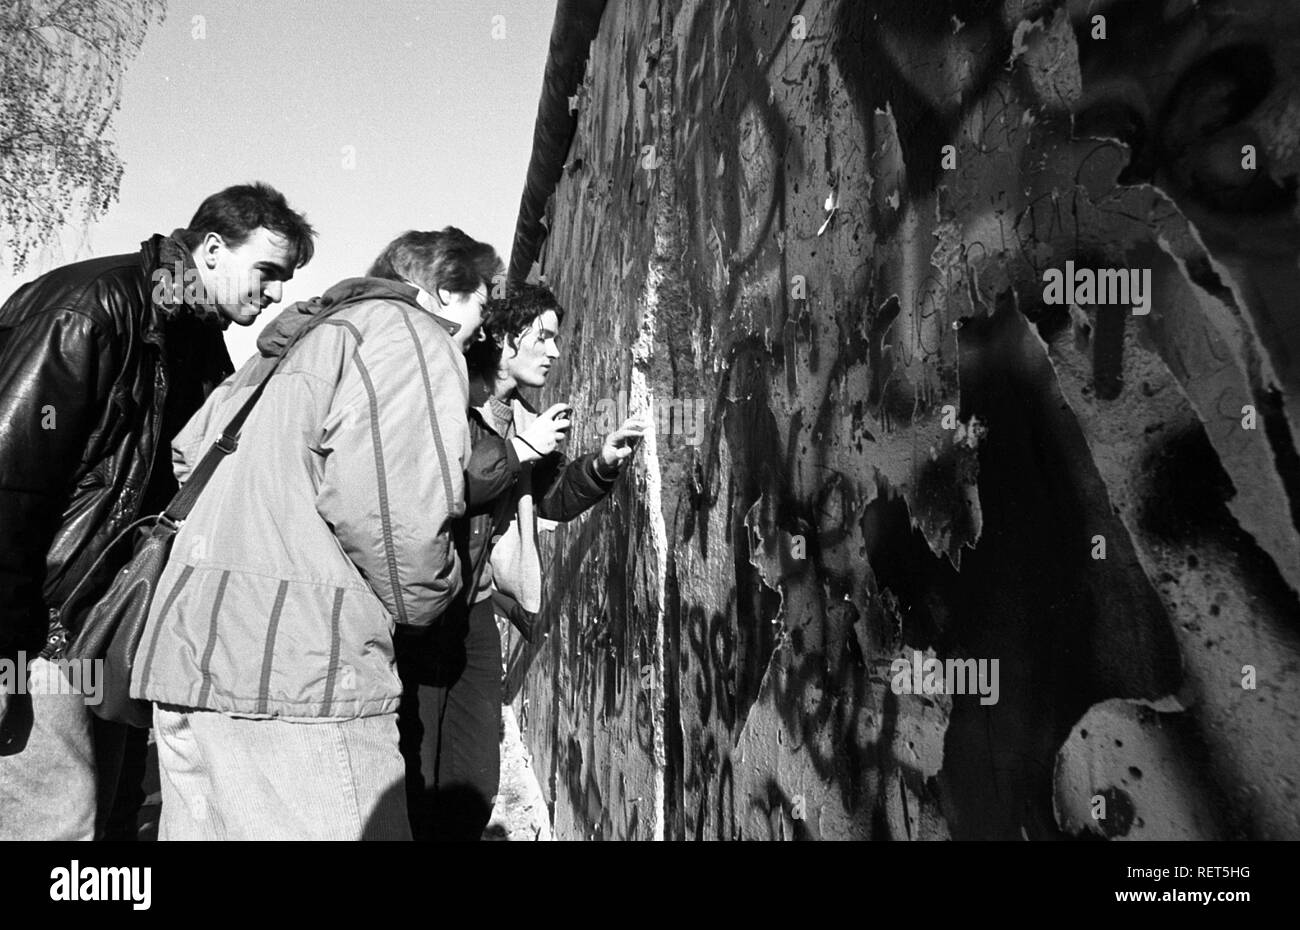 Fall Of The Berlin Wall Berlin Stock Photo Alamy